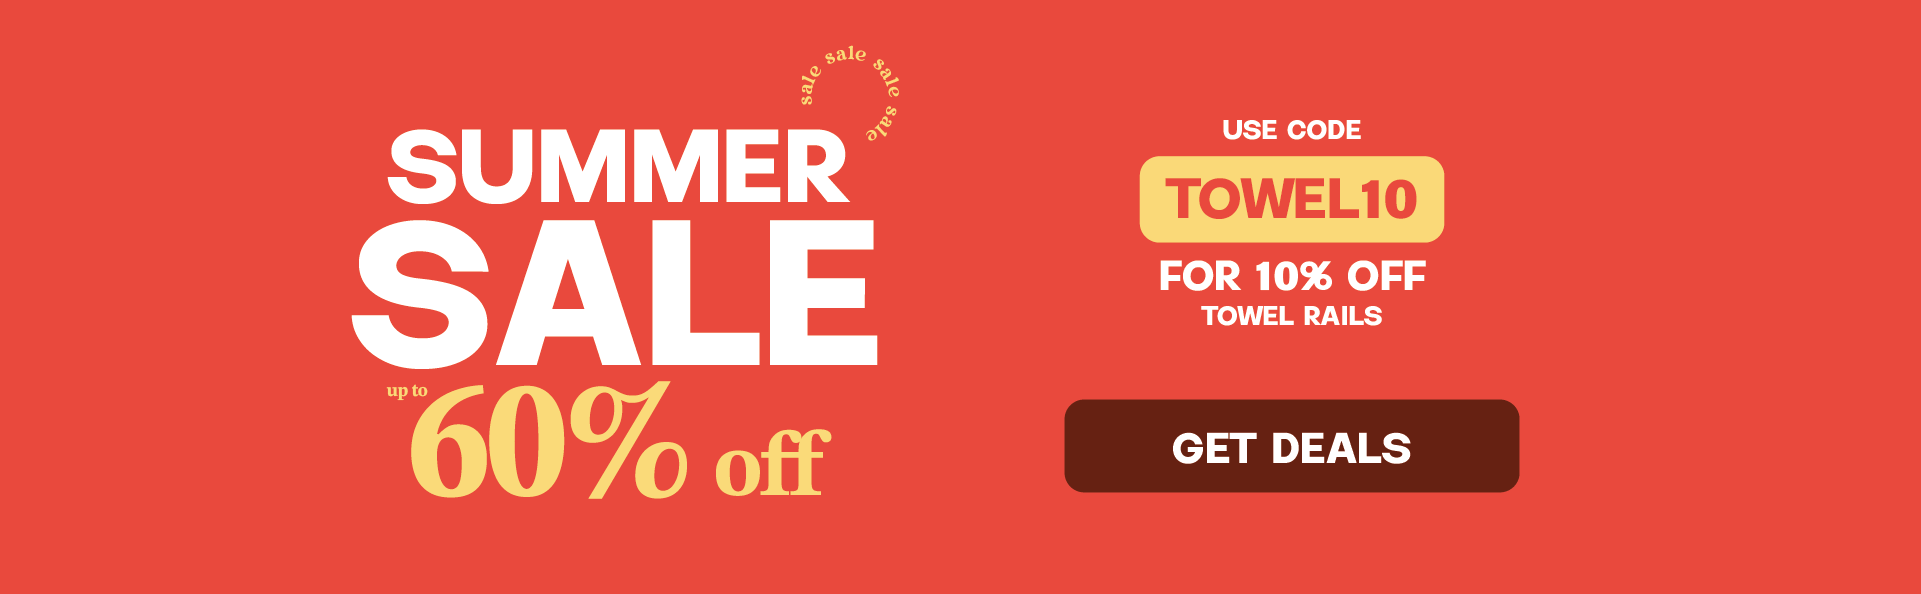 Summer Sale 60% off!